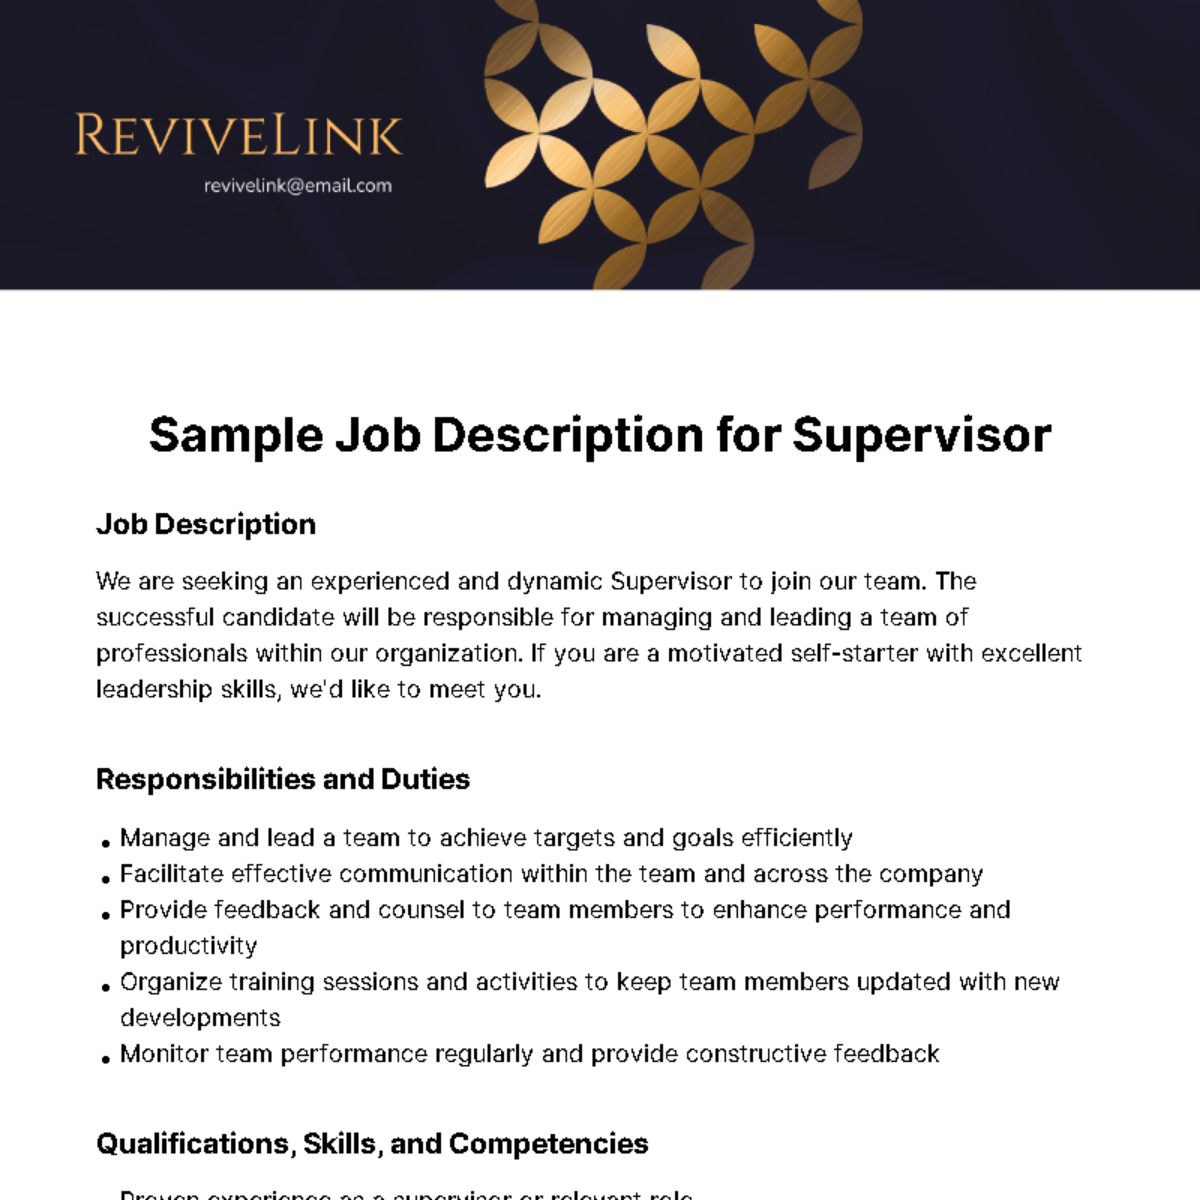 Sample Job Description for Supervisor Template